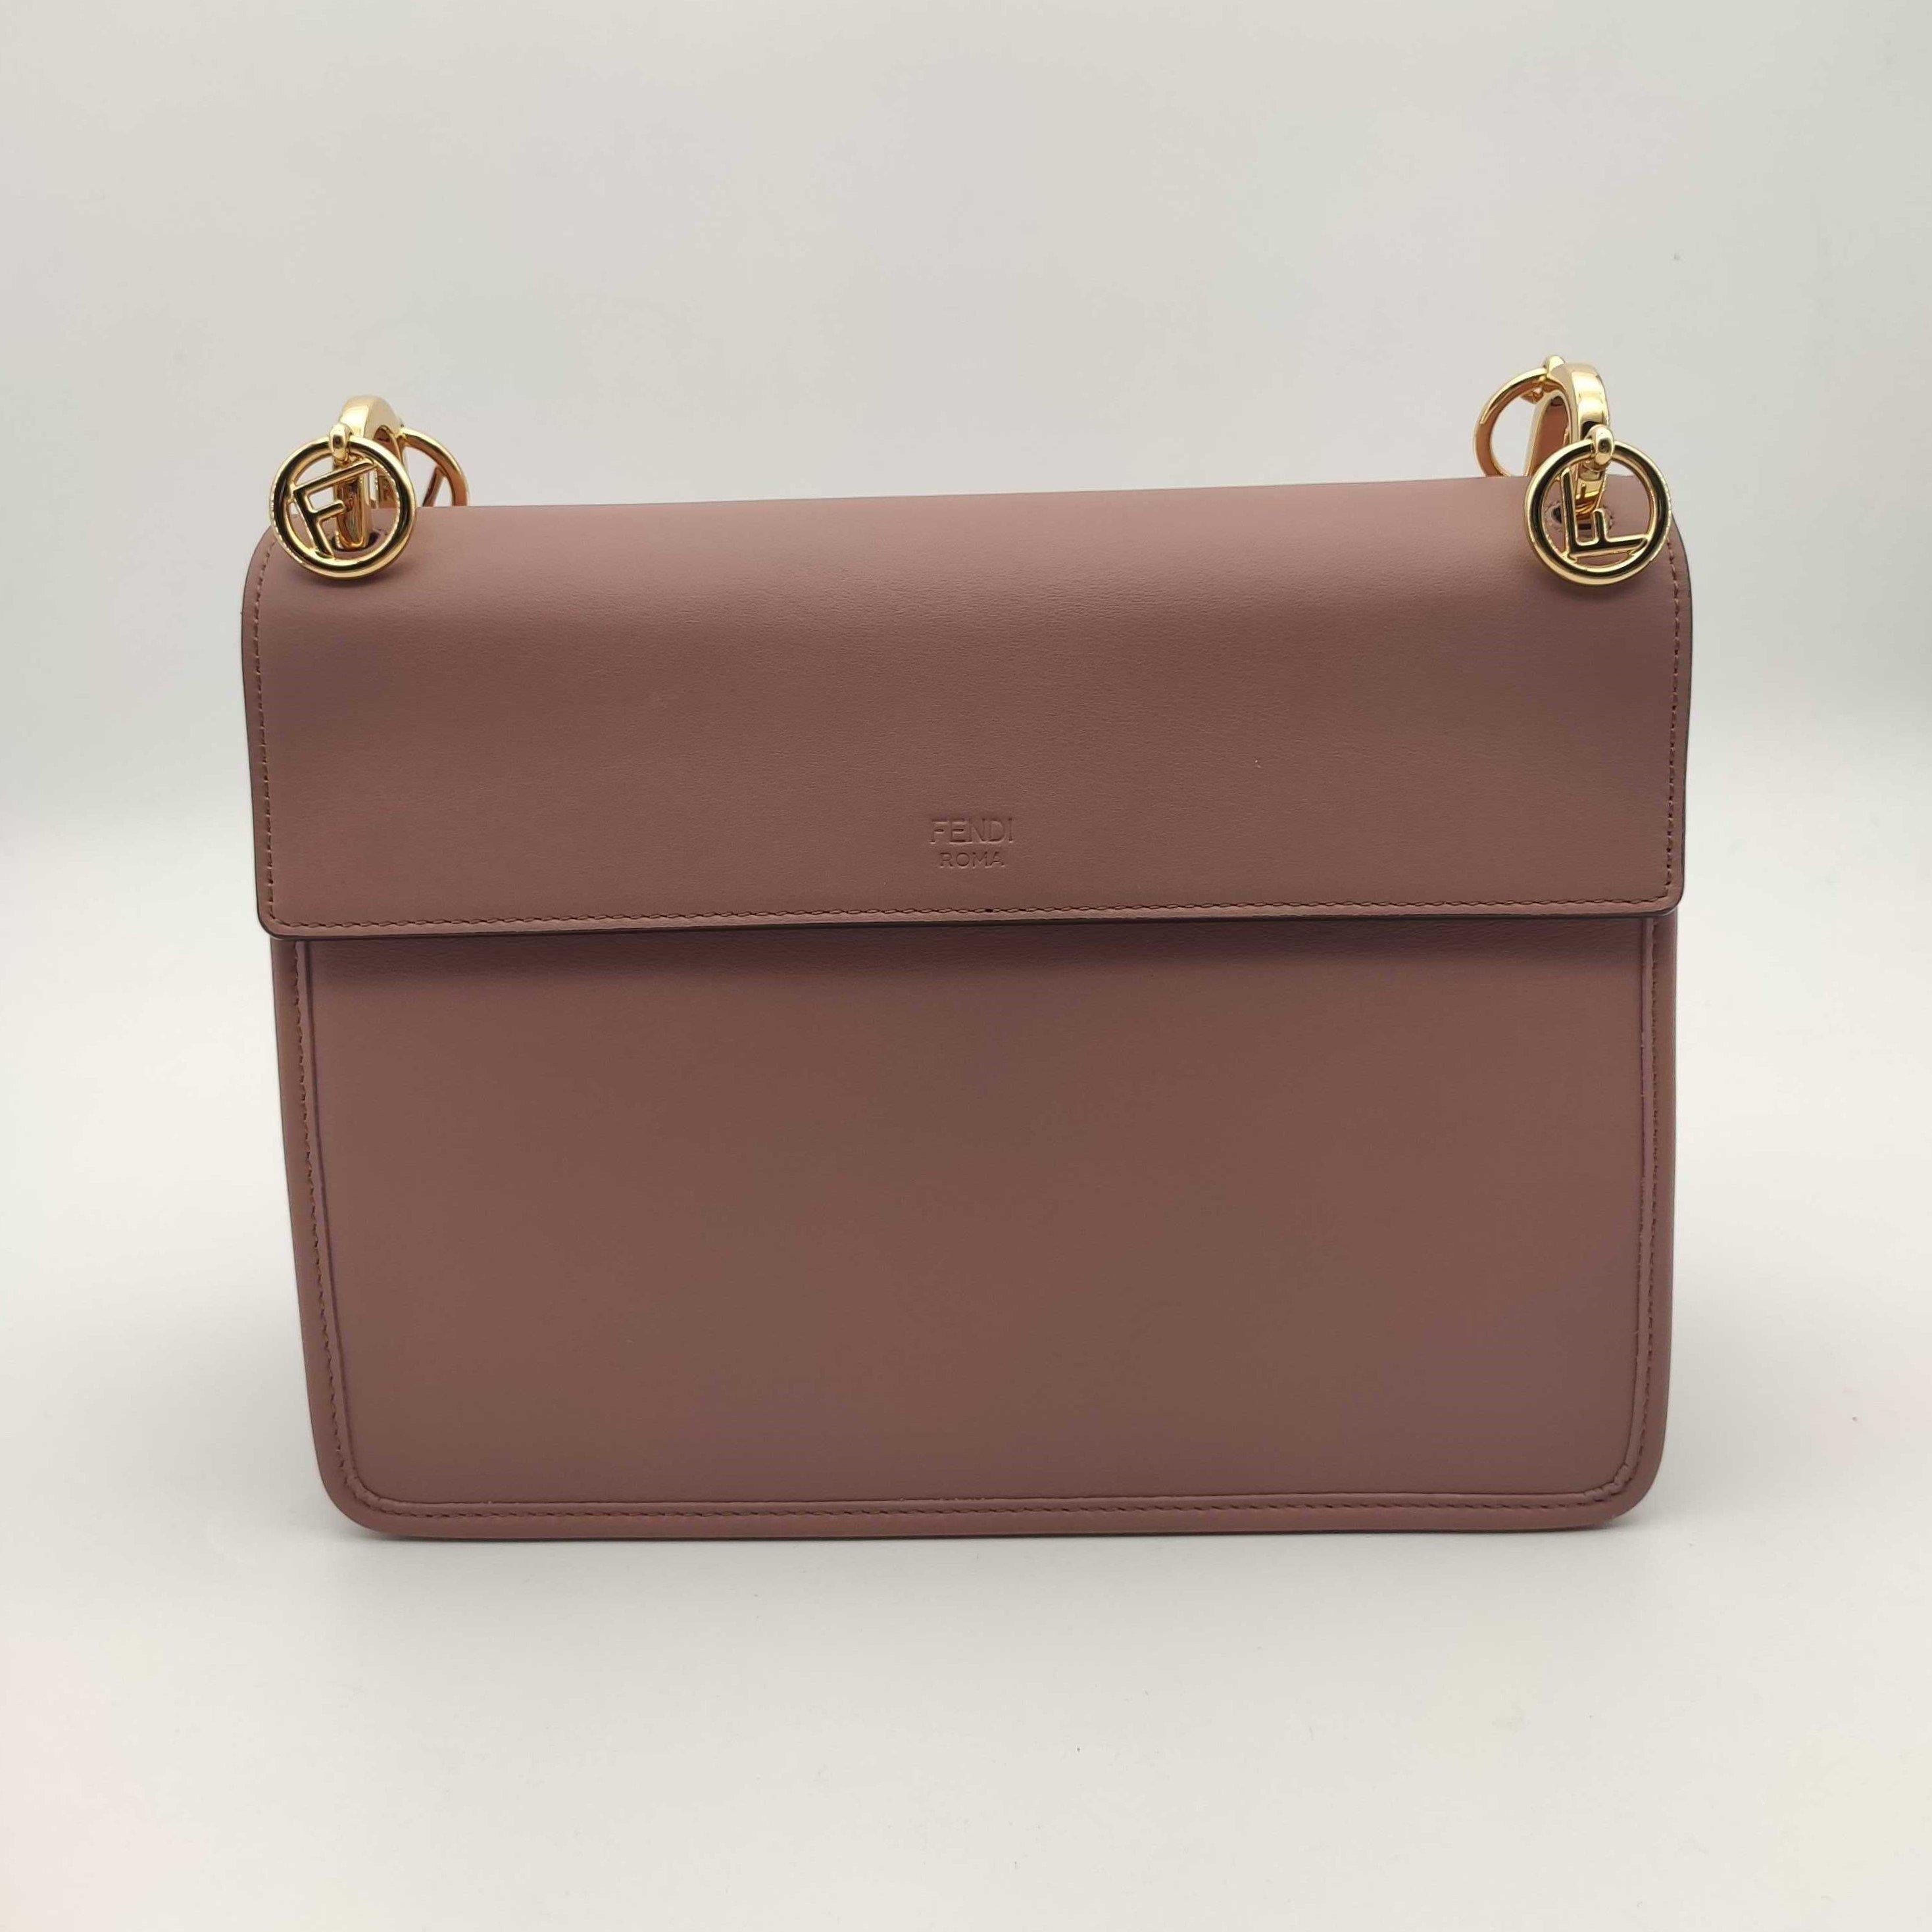 Gray FENDI Kan I Handbag in Pink Leather